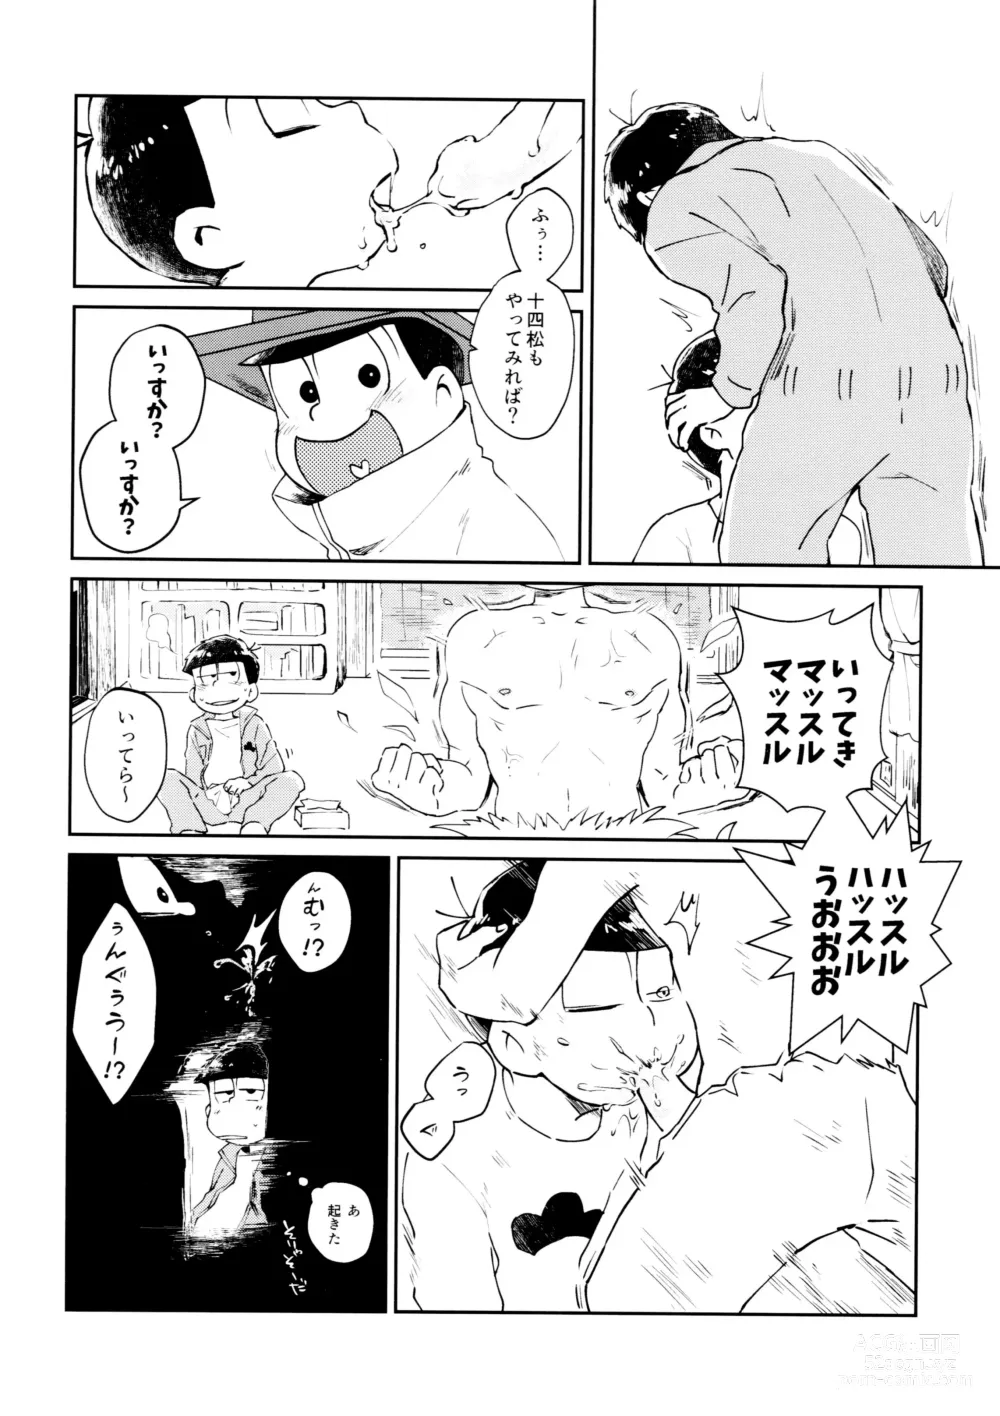 Page 10 of doujinshi Wild Coup dEtat